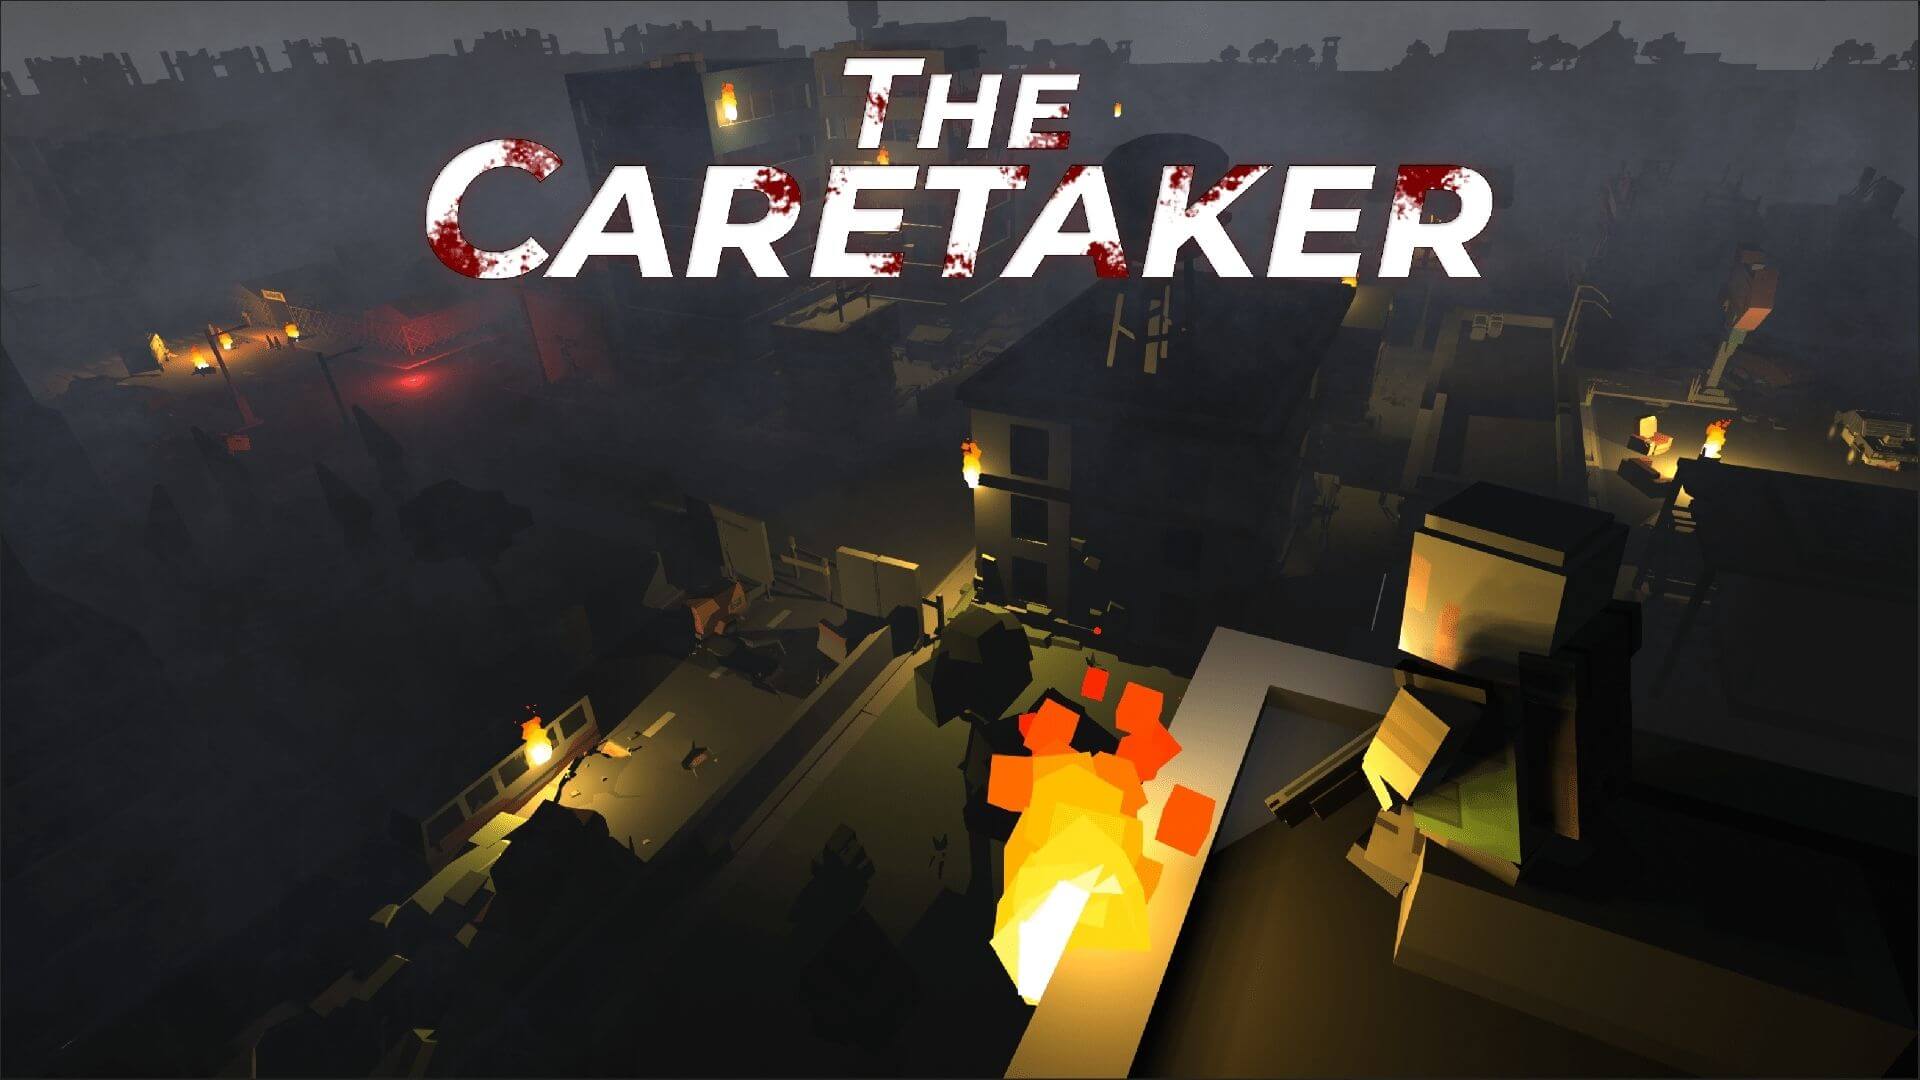 The Caretaker survival horror